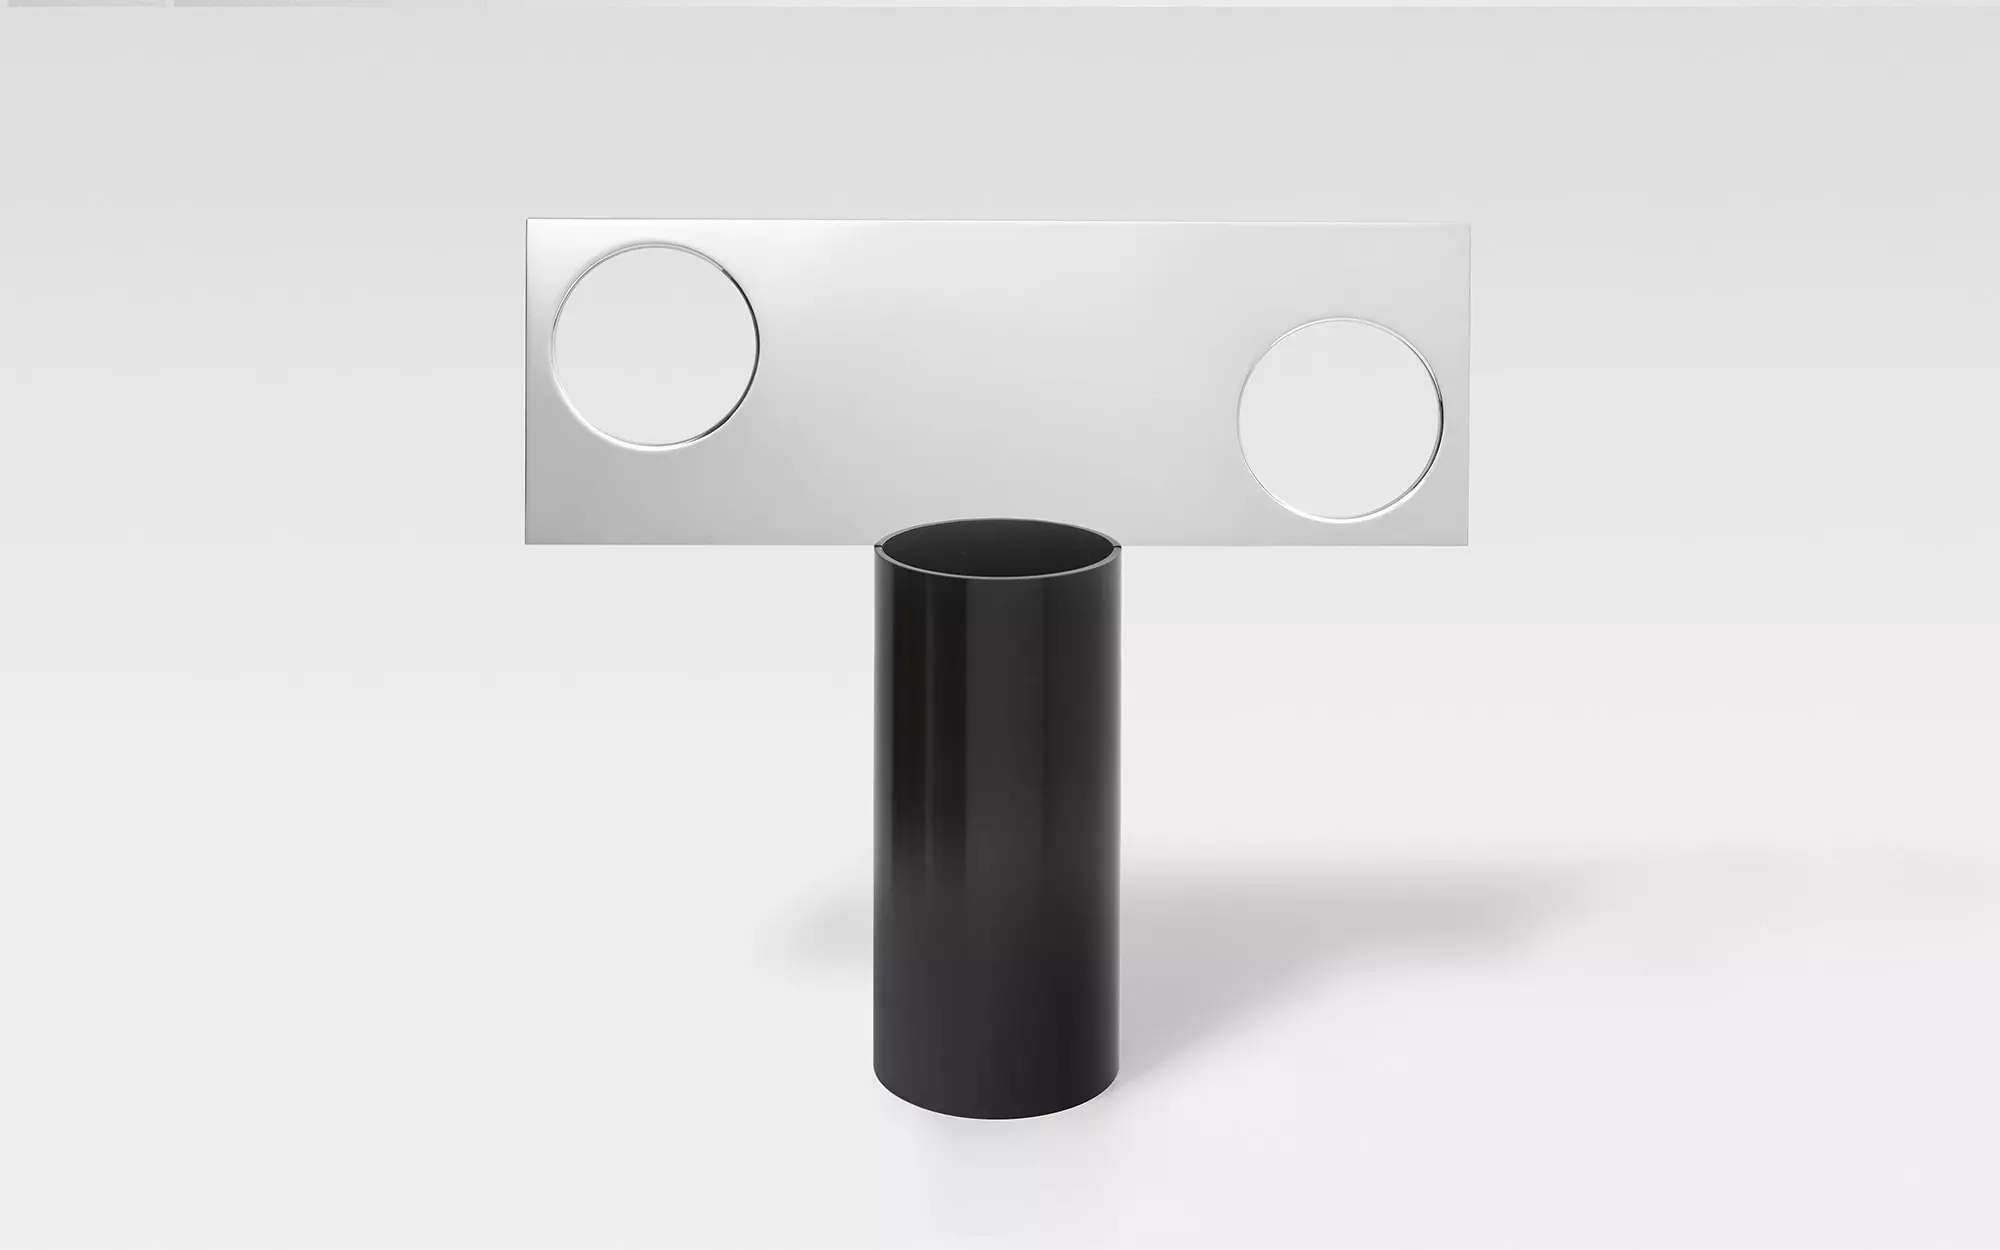 Lunettes - 1 Vase - Pierre Charpin - Side table - Galerie kreo